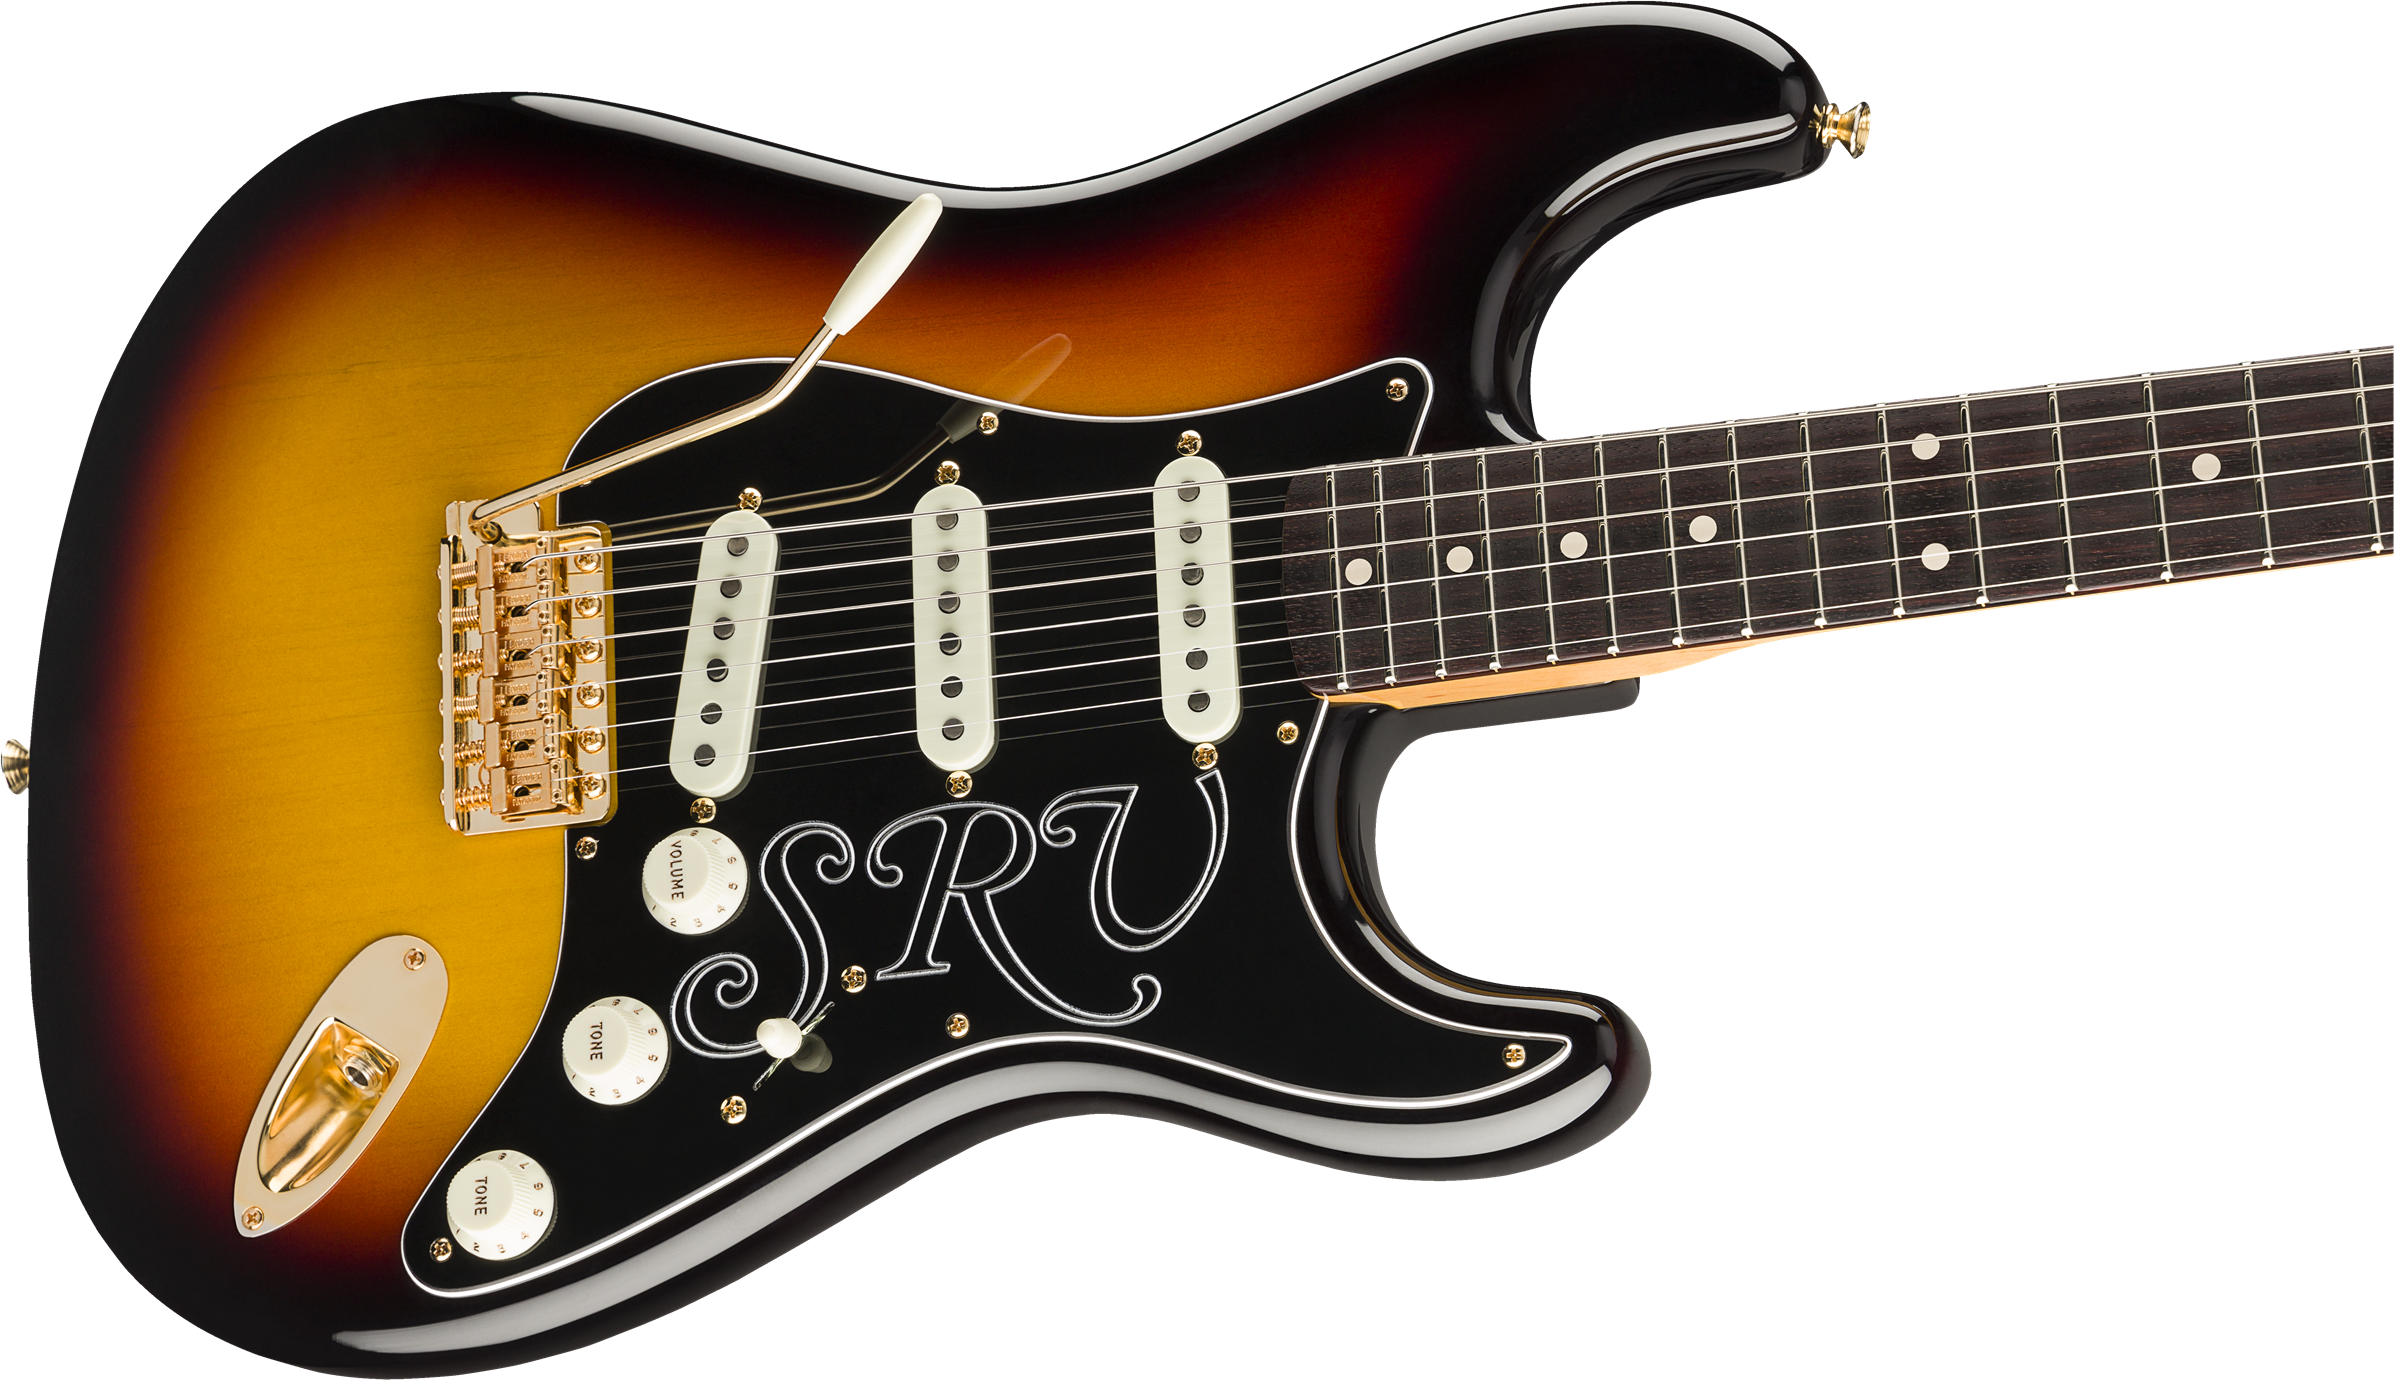 Fender Custom Shop Stevie Ray Vaughan Signature Stratocaster Rosewood Fingerboard 3-Color Sunburst f-9235000863 SERIAL NUMBER CZ545471 - 7.8 LBS